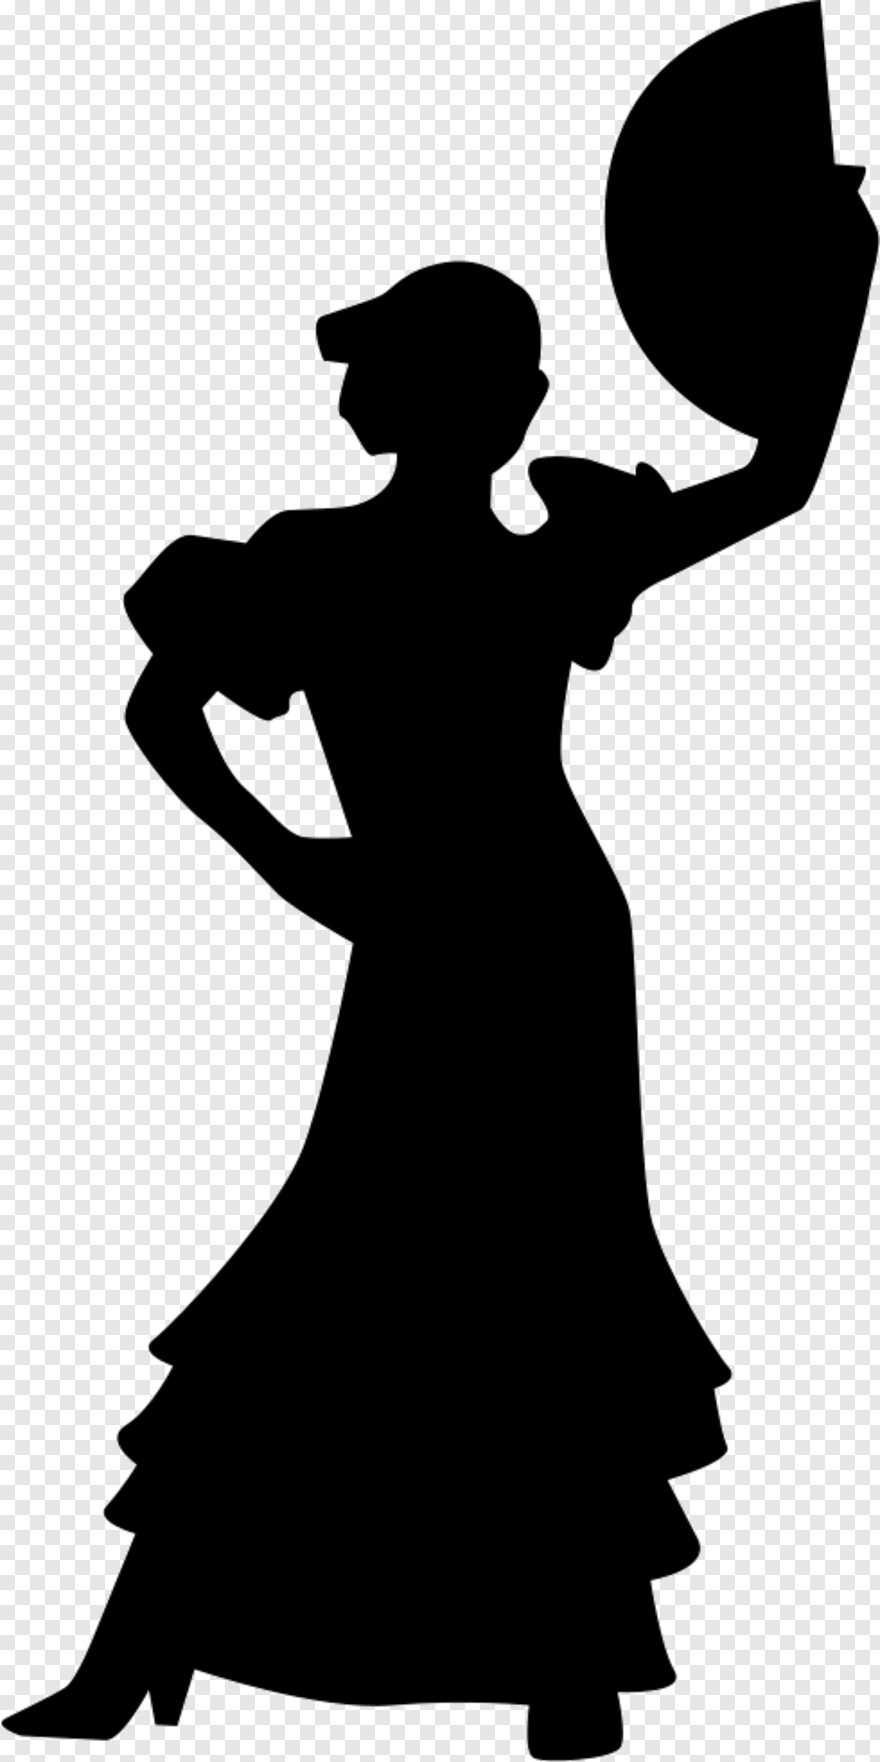 woman-silhouette # 976698